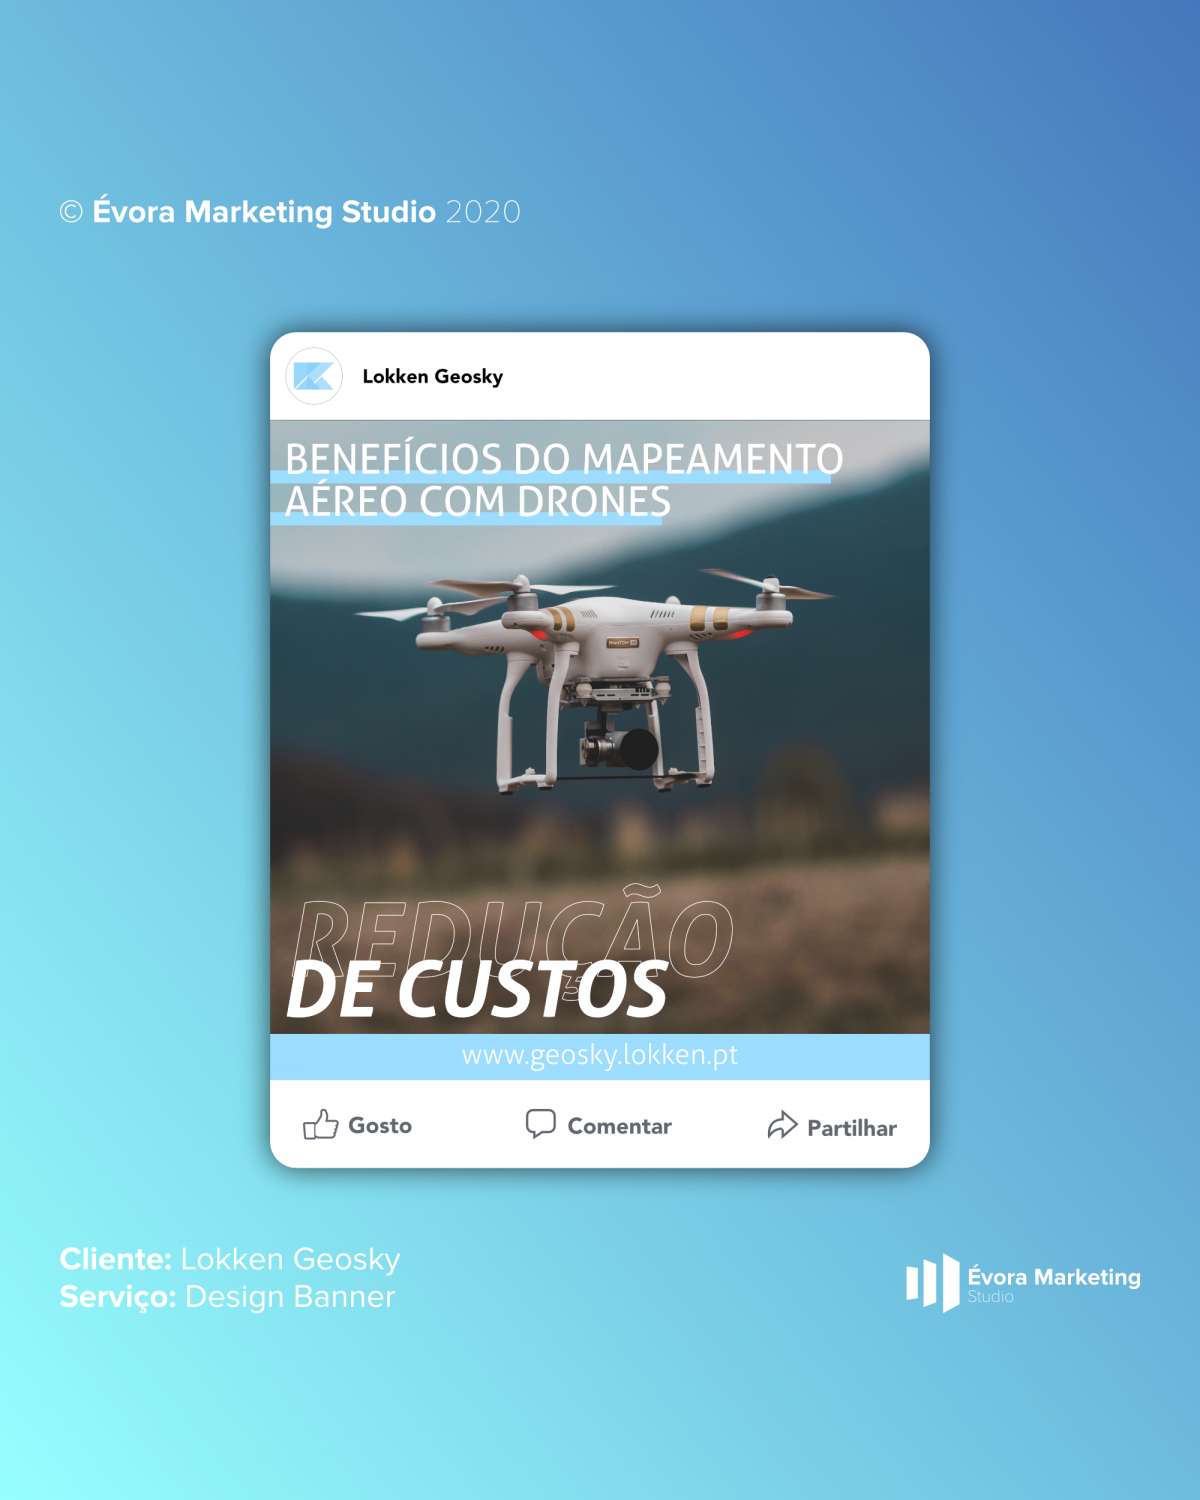 Évora Marketing Studio - Évora - Web Design